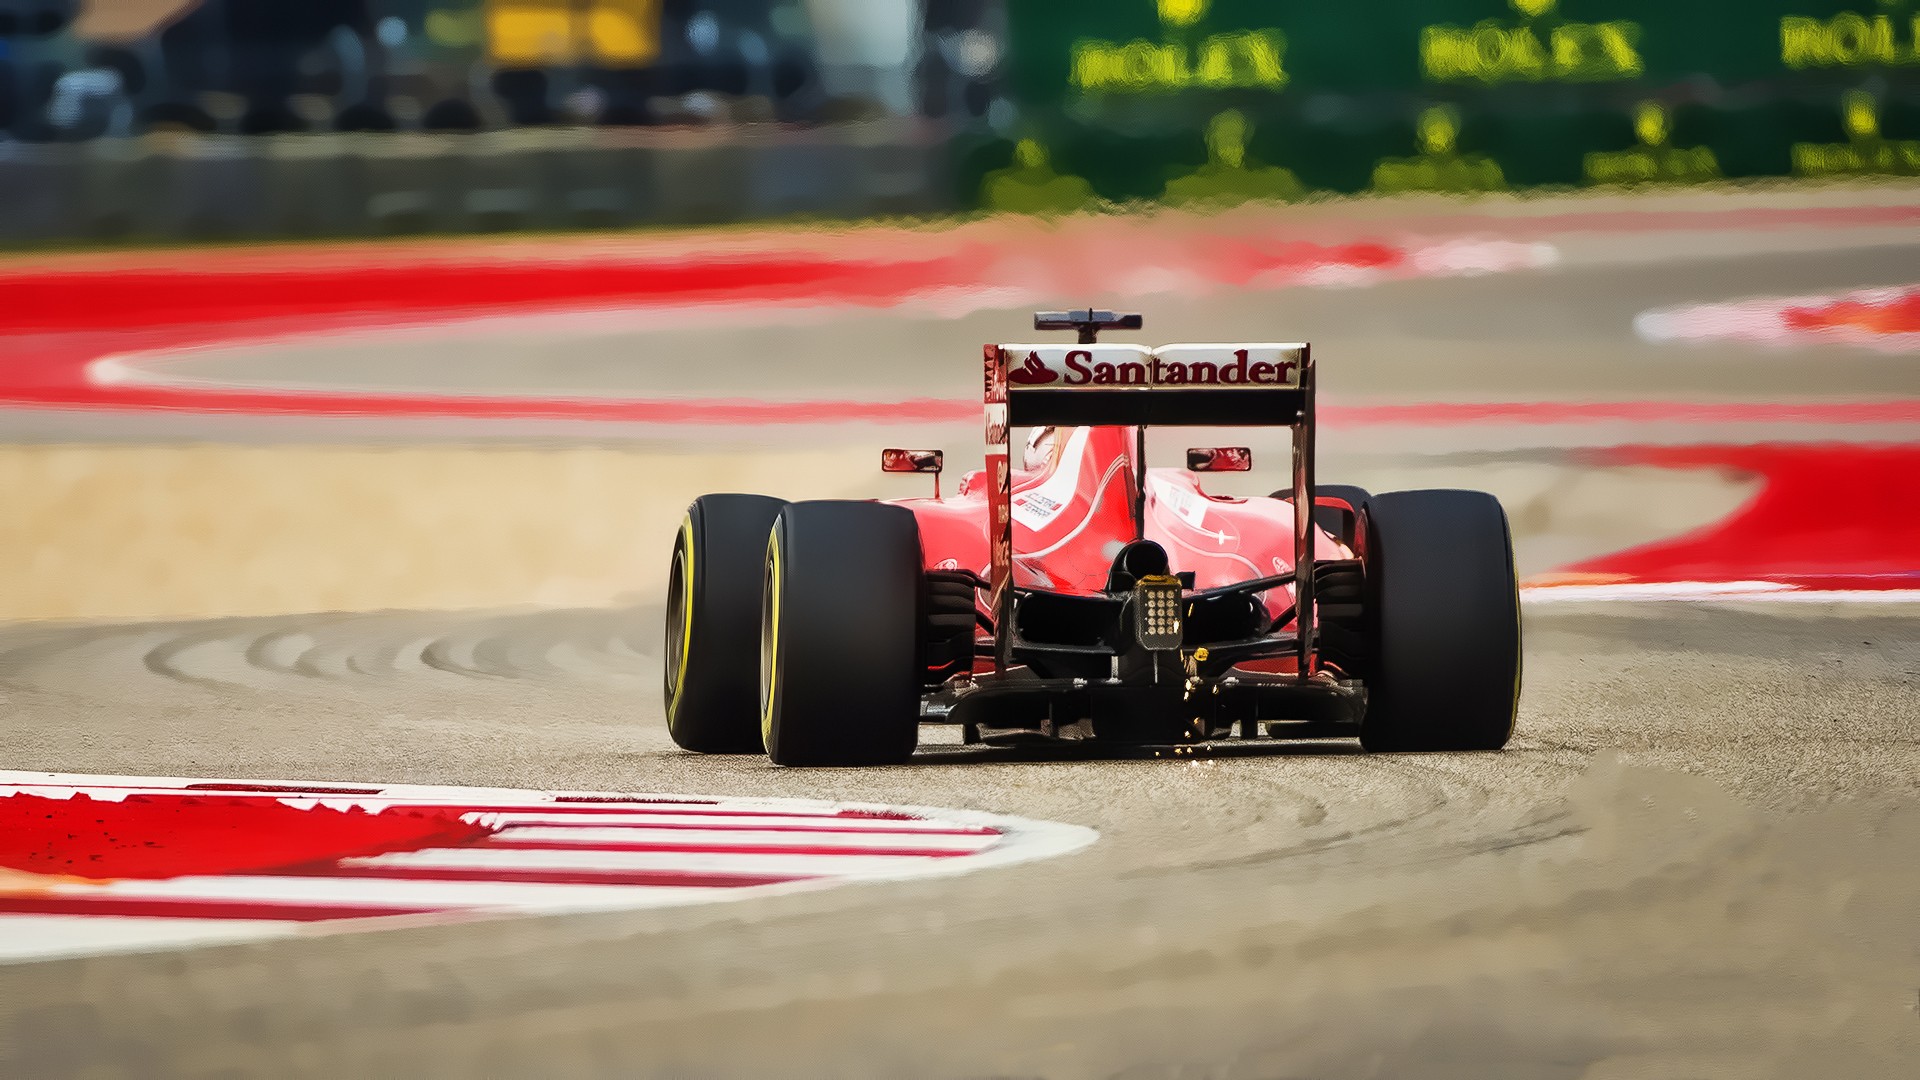 General 1920x1080 Ferrari Formula 1 race cars car vehicle race tracks sport red cars motorsport racing